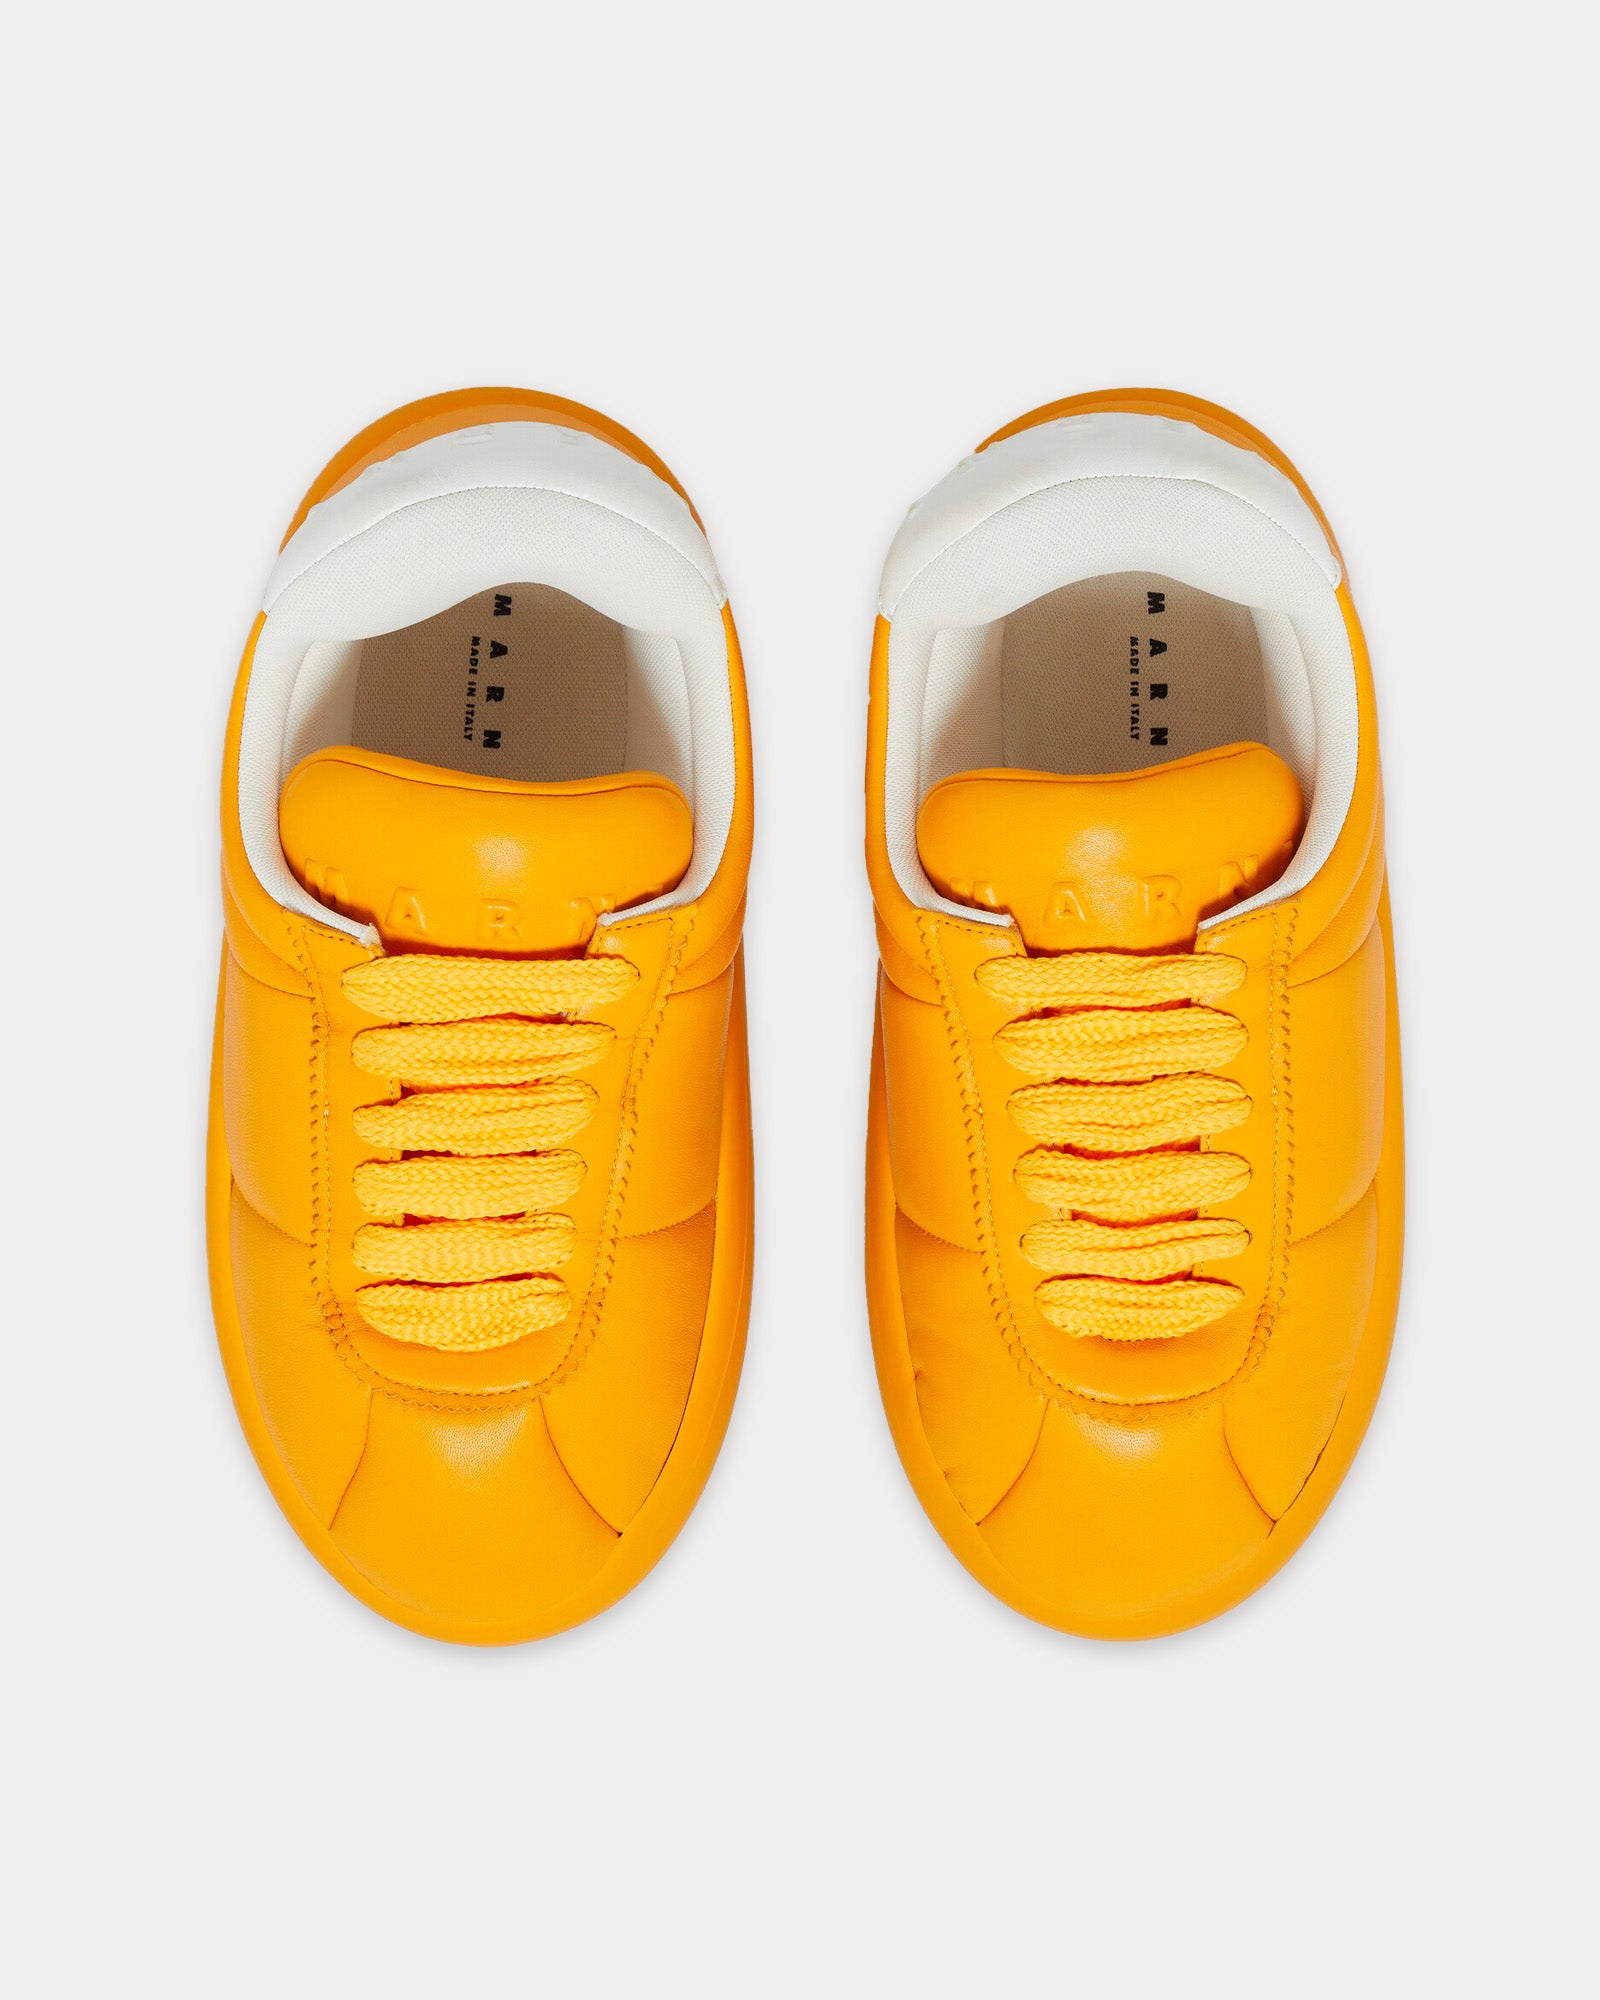 Marni - Bigfoot 2.0 Leather Orange Low Top Sneakers